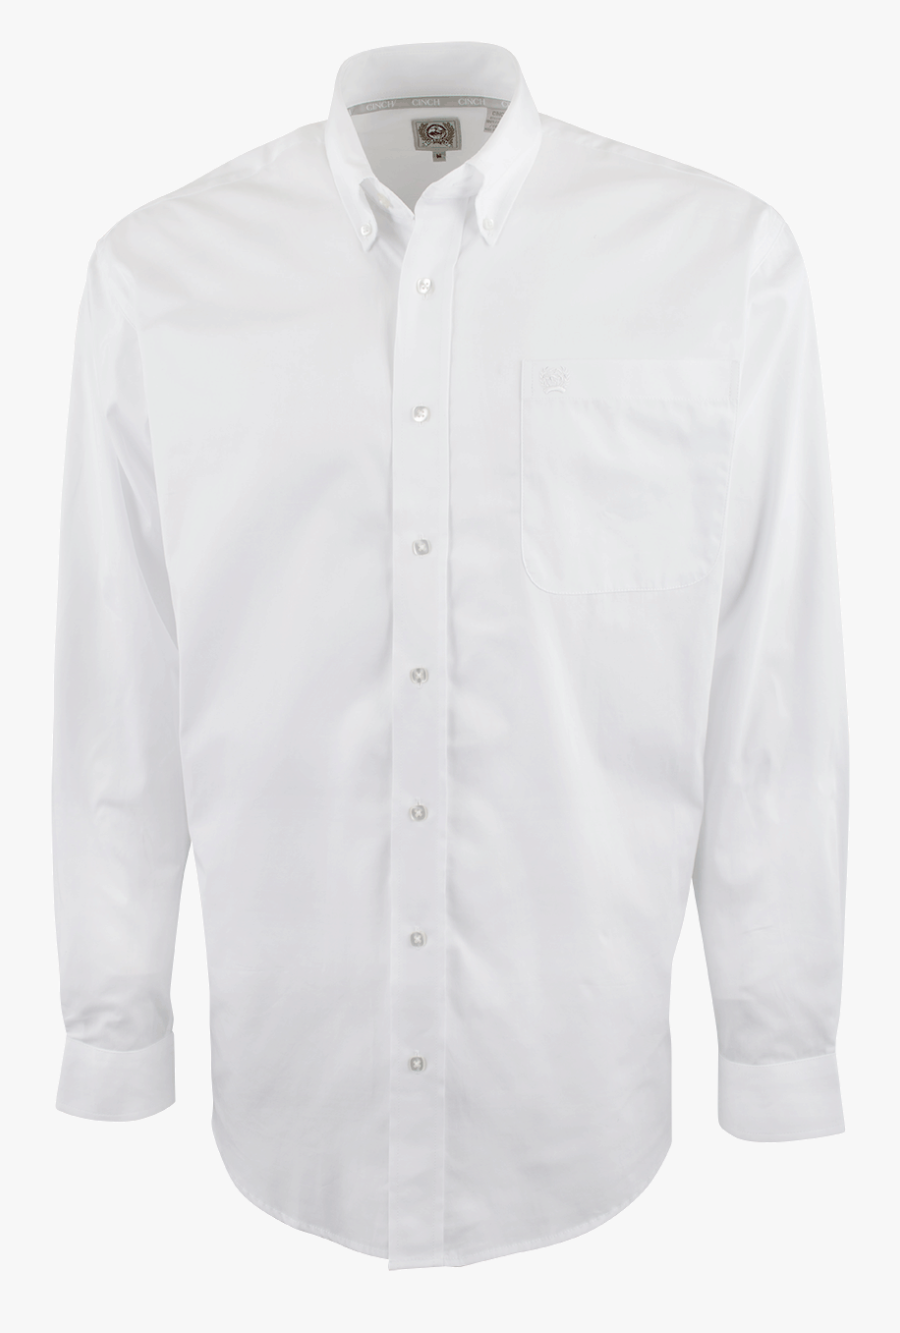 Clipart Library Shirt Clip Cinch - Men White Long Sleeve Shirt For Work ...